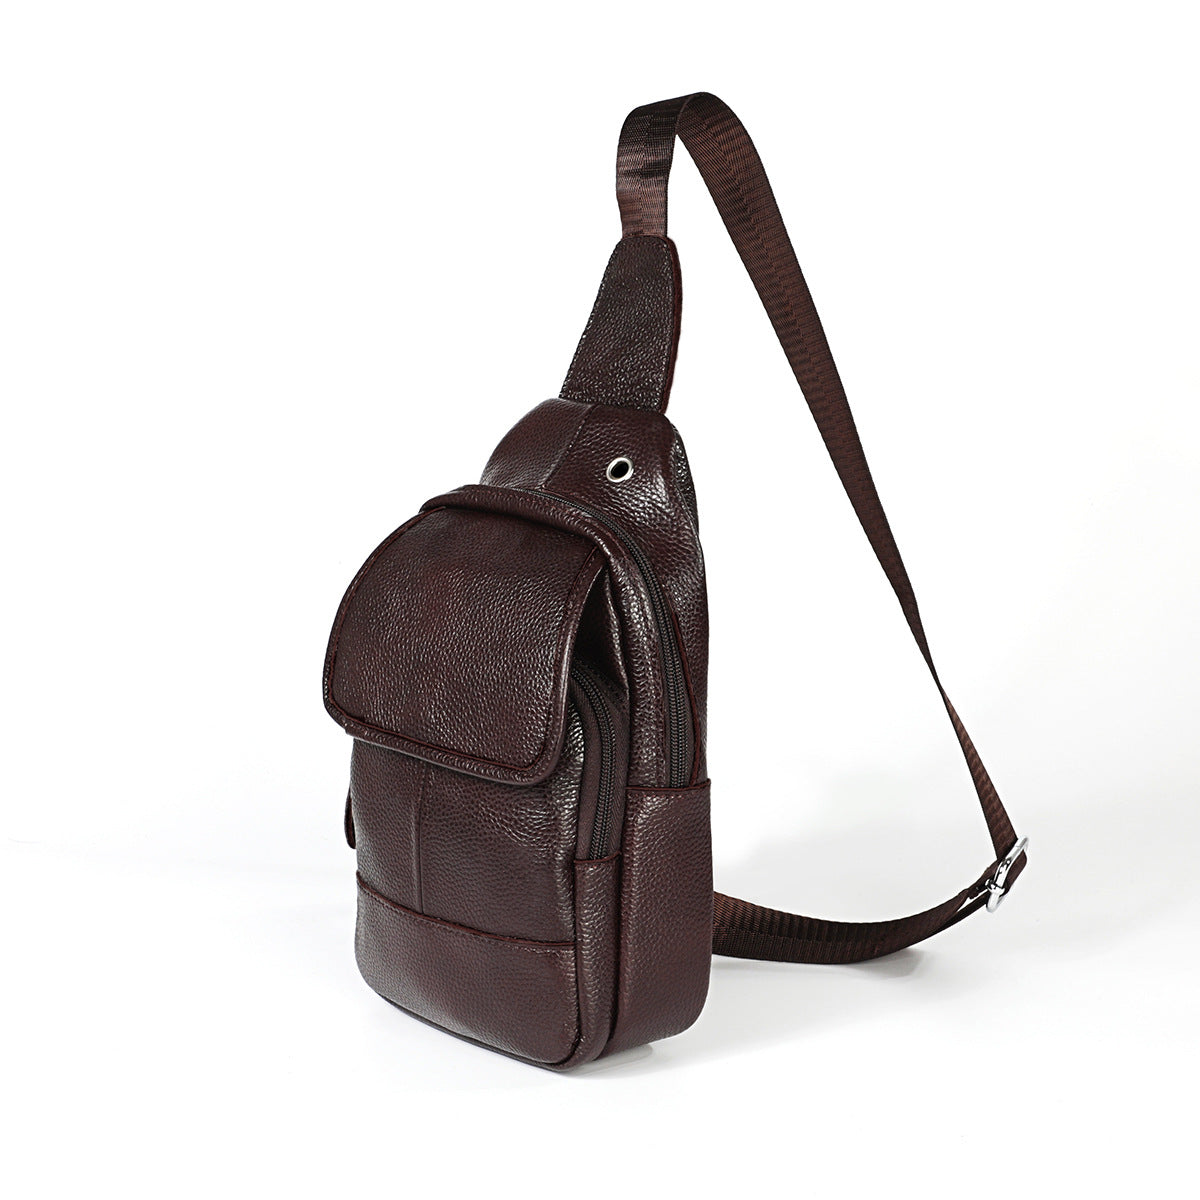 Genuine Leather Sling Backpack, Travel Chest Bag